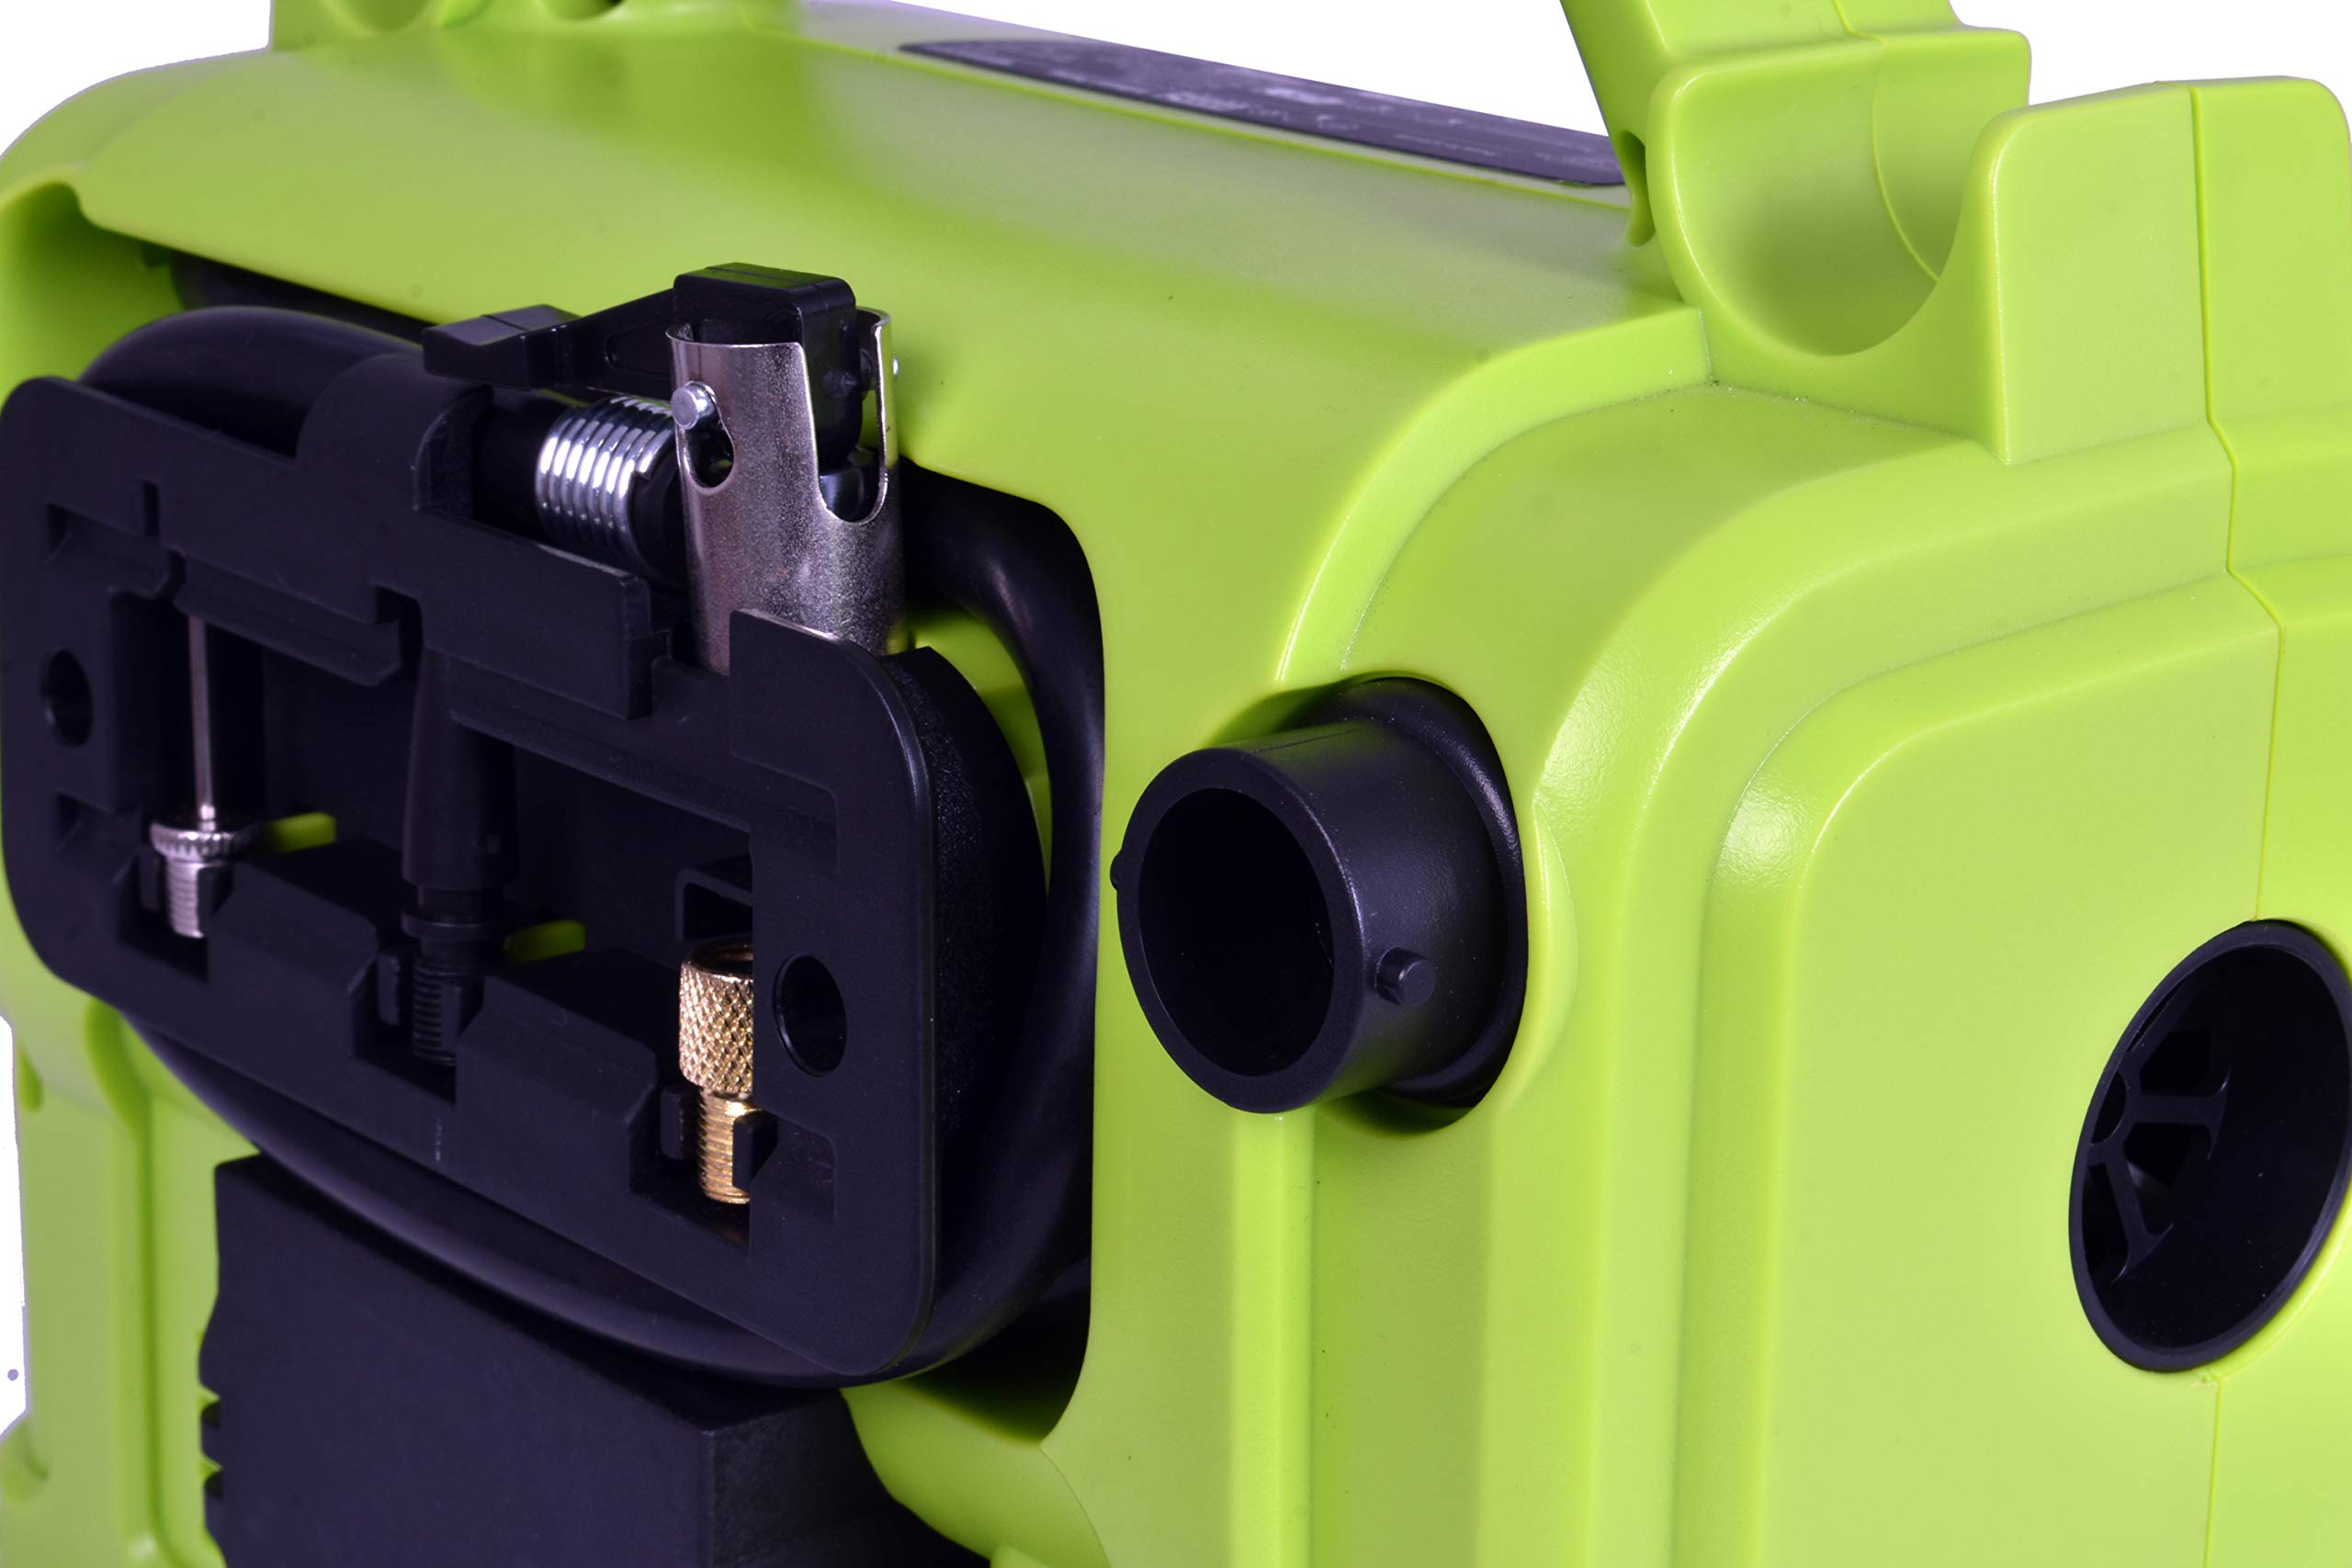 Plantex Portable Electric Inflator Pump for Motorbikes & Car Bicycle,Football air Pump